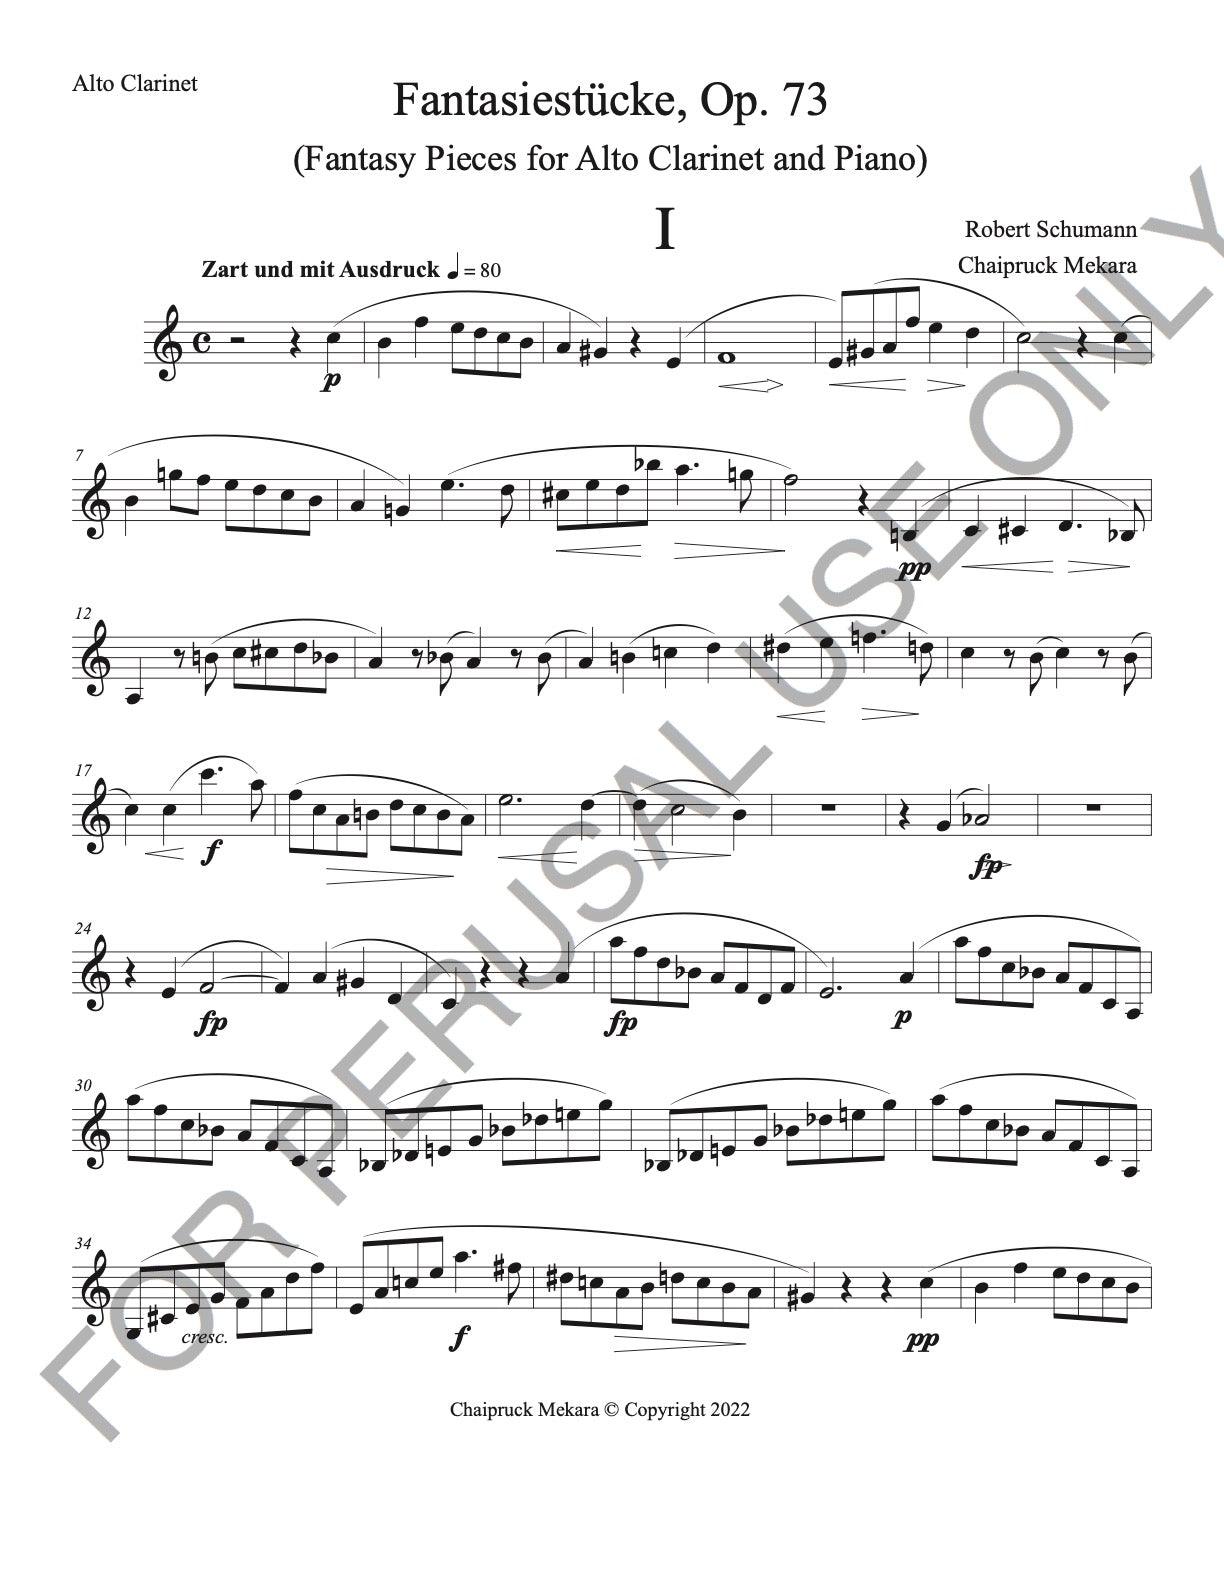 Alto Clarinet and Piano: Schumann's Fantasiestücke, Op. 73 - ChaipruckMekara